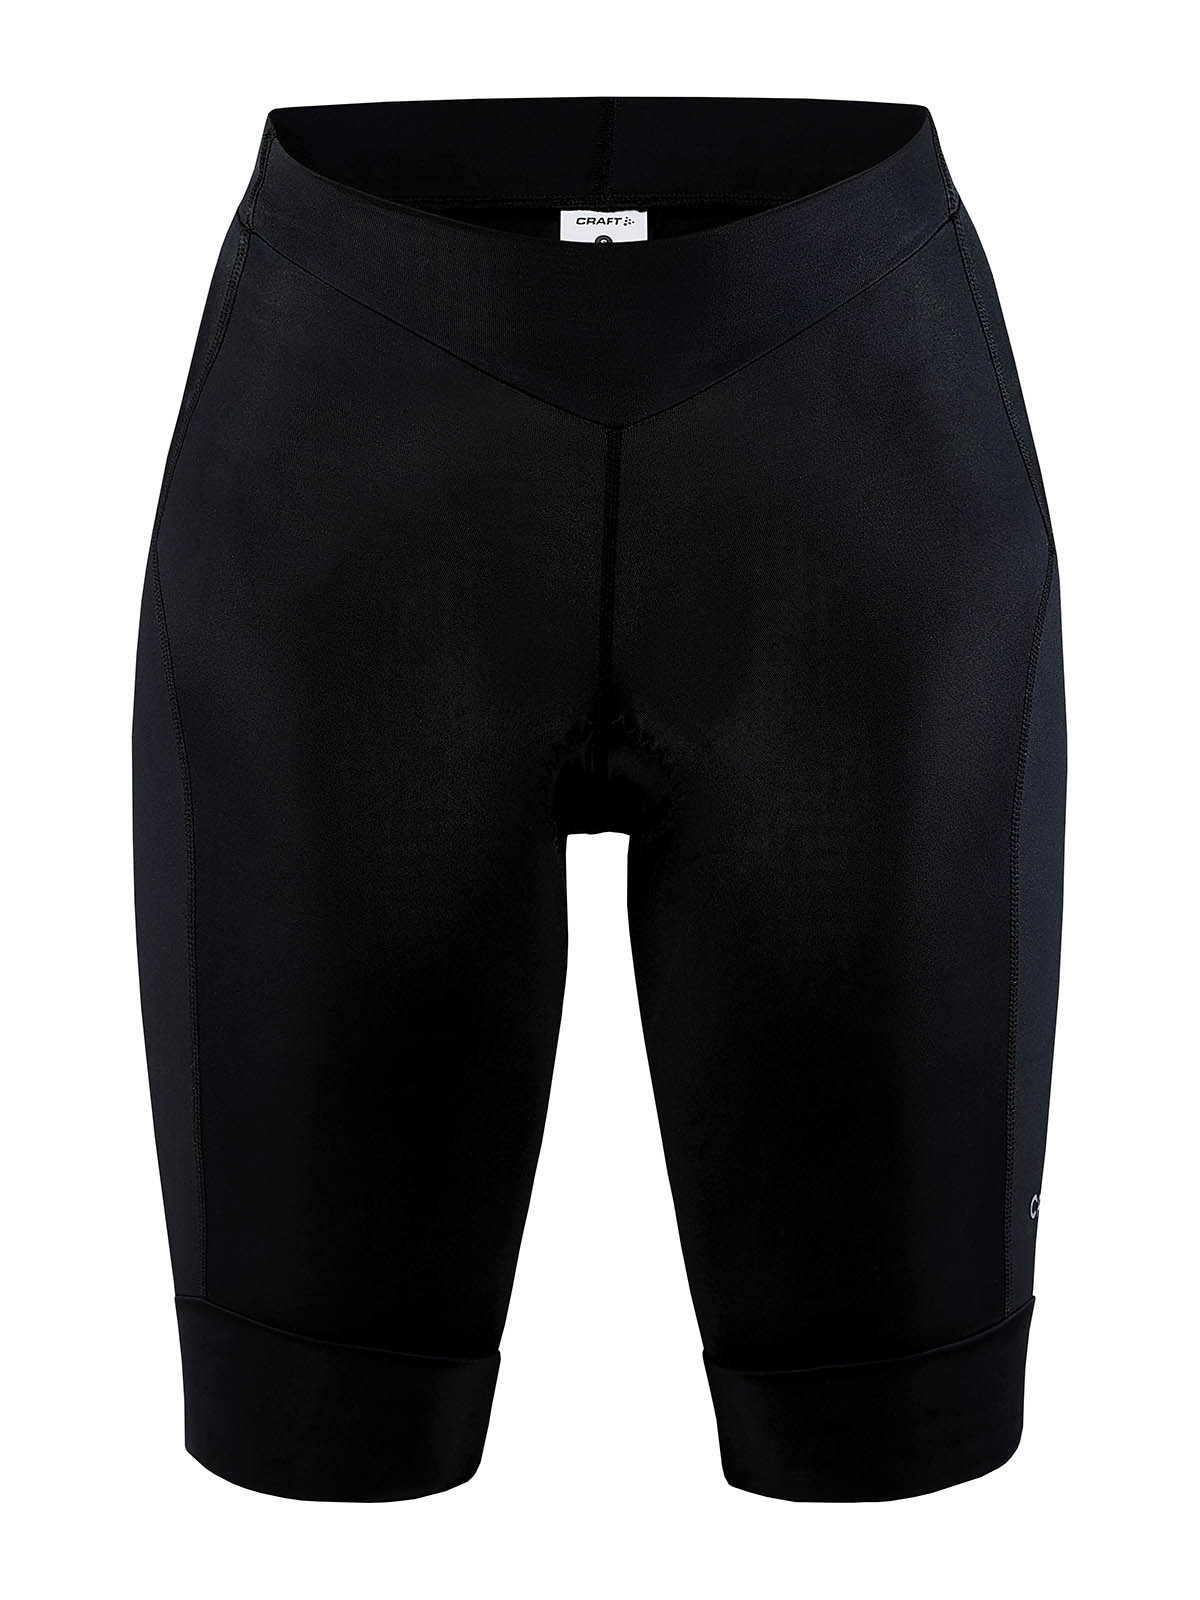 Craft Core Endur Shorts W - Black